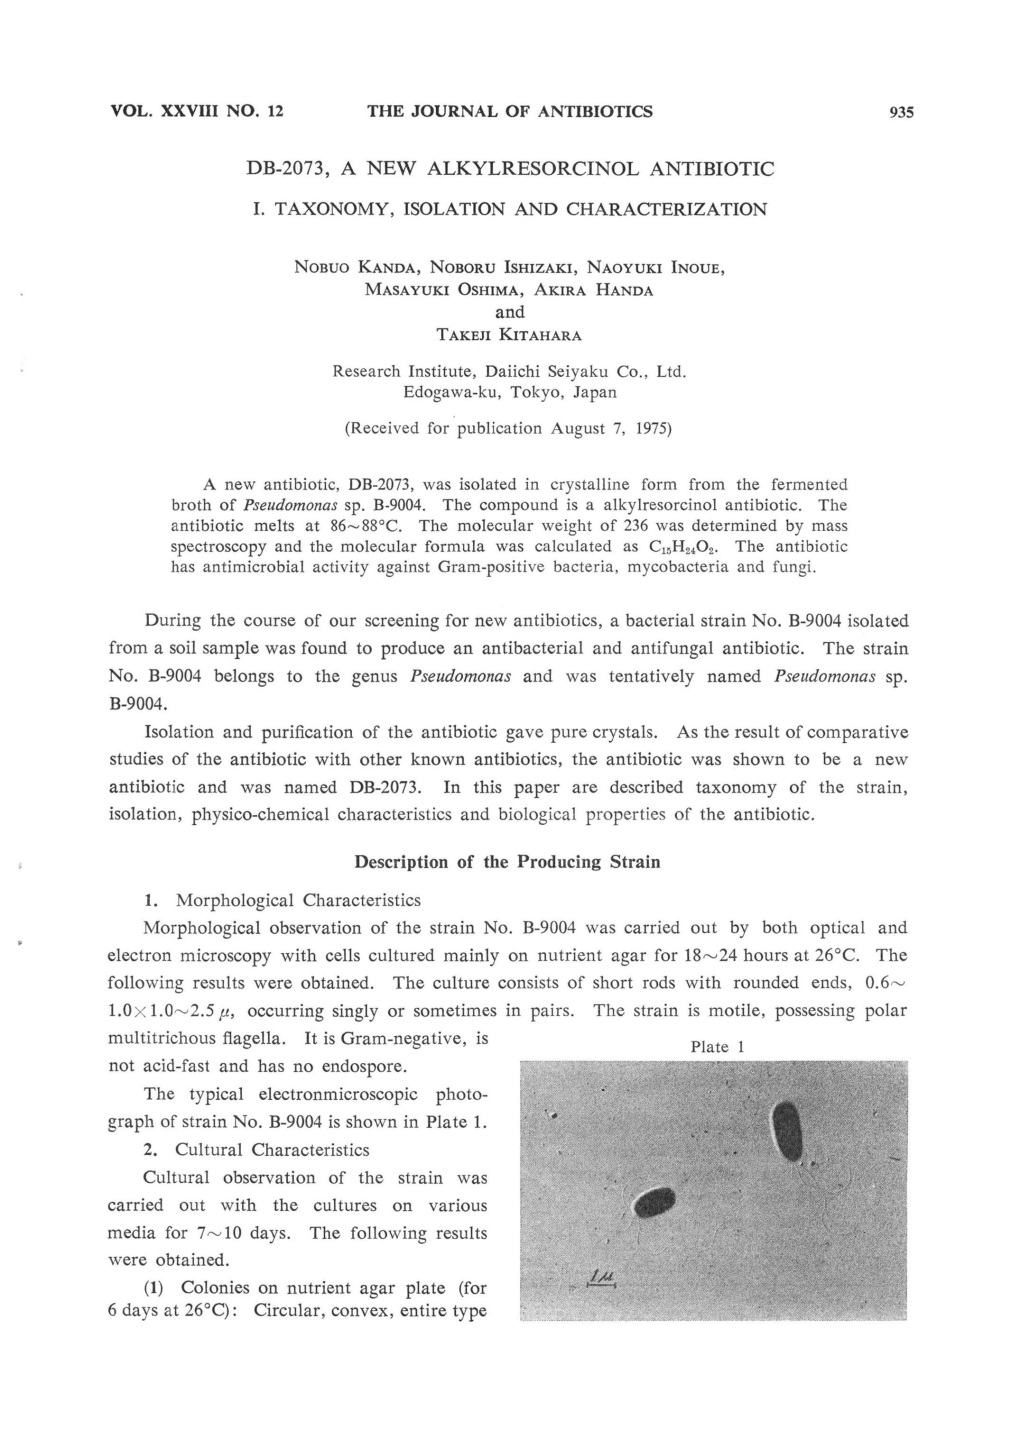 Multitrichous Flagella. It Is Gram-Negative, Is Not Acid-Fast And